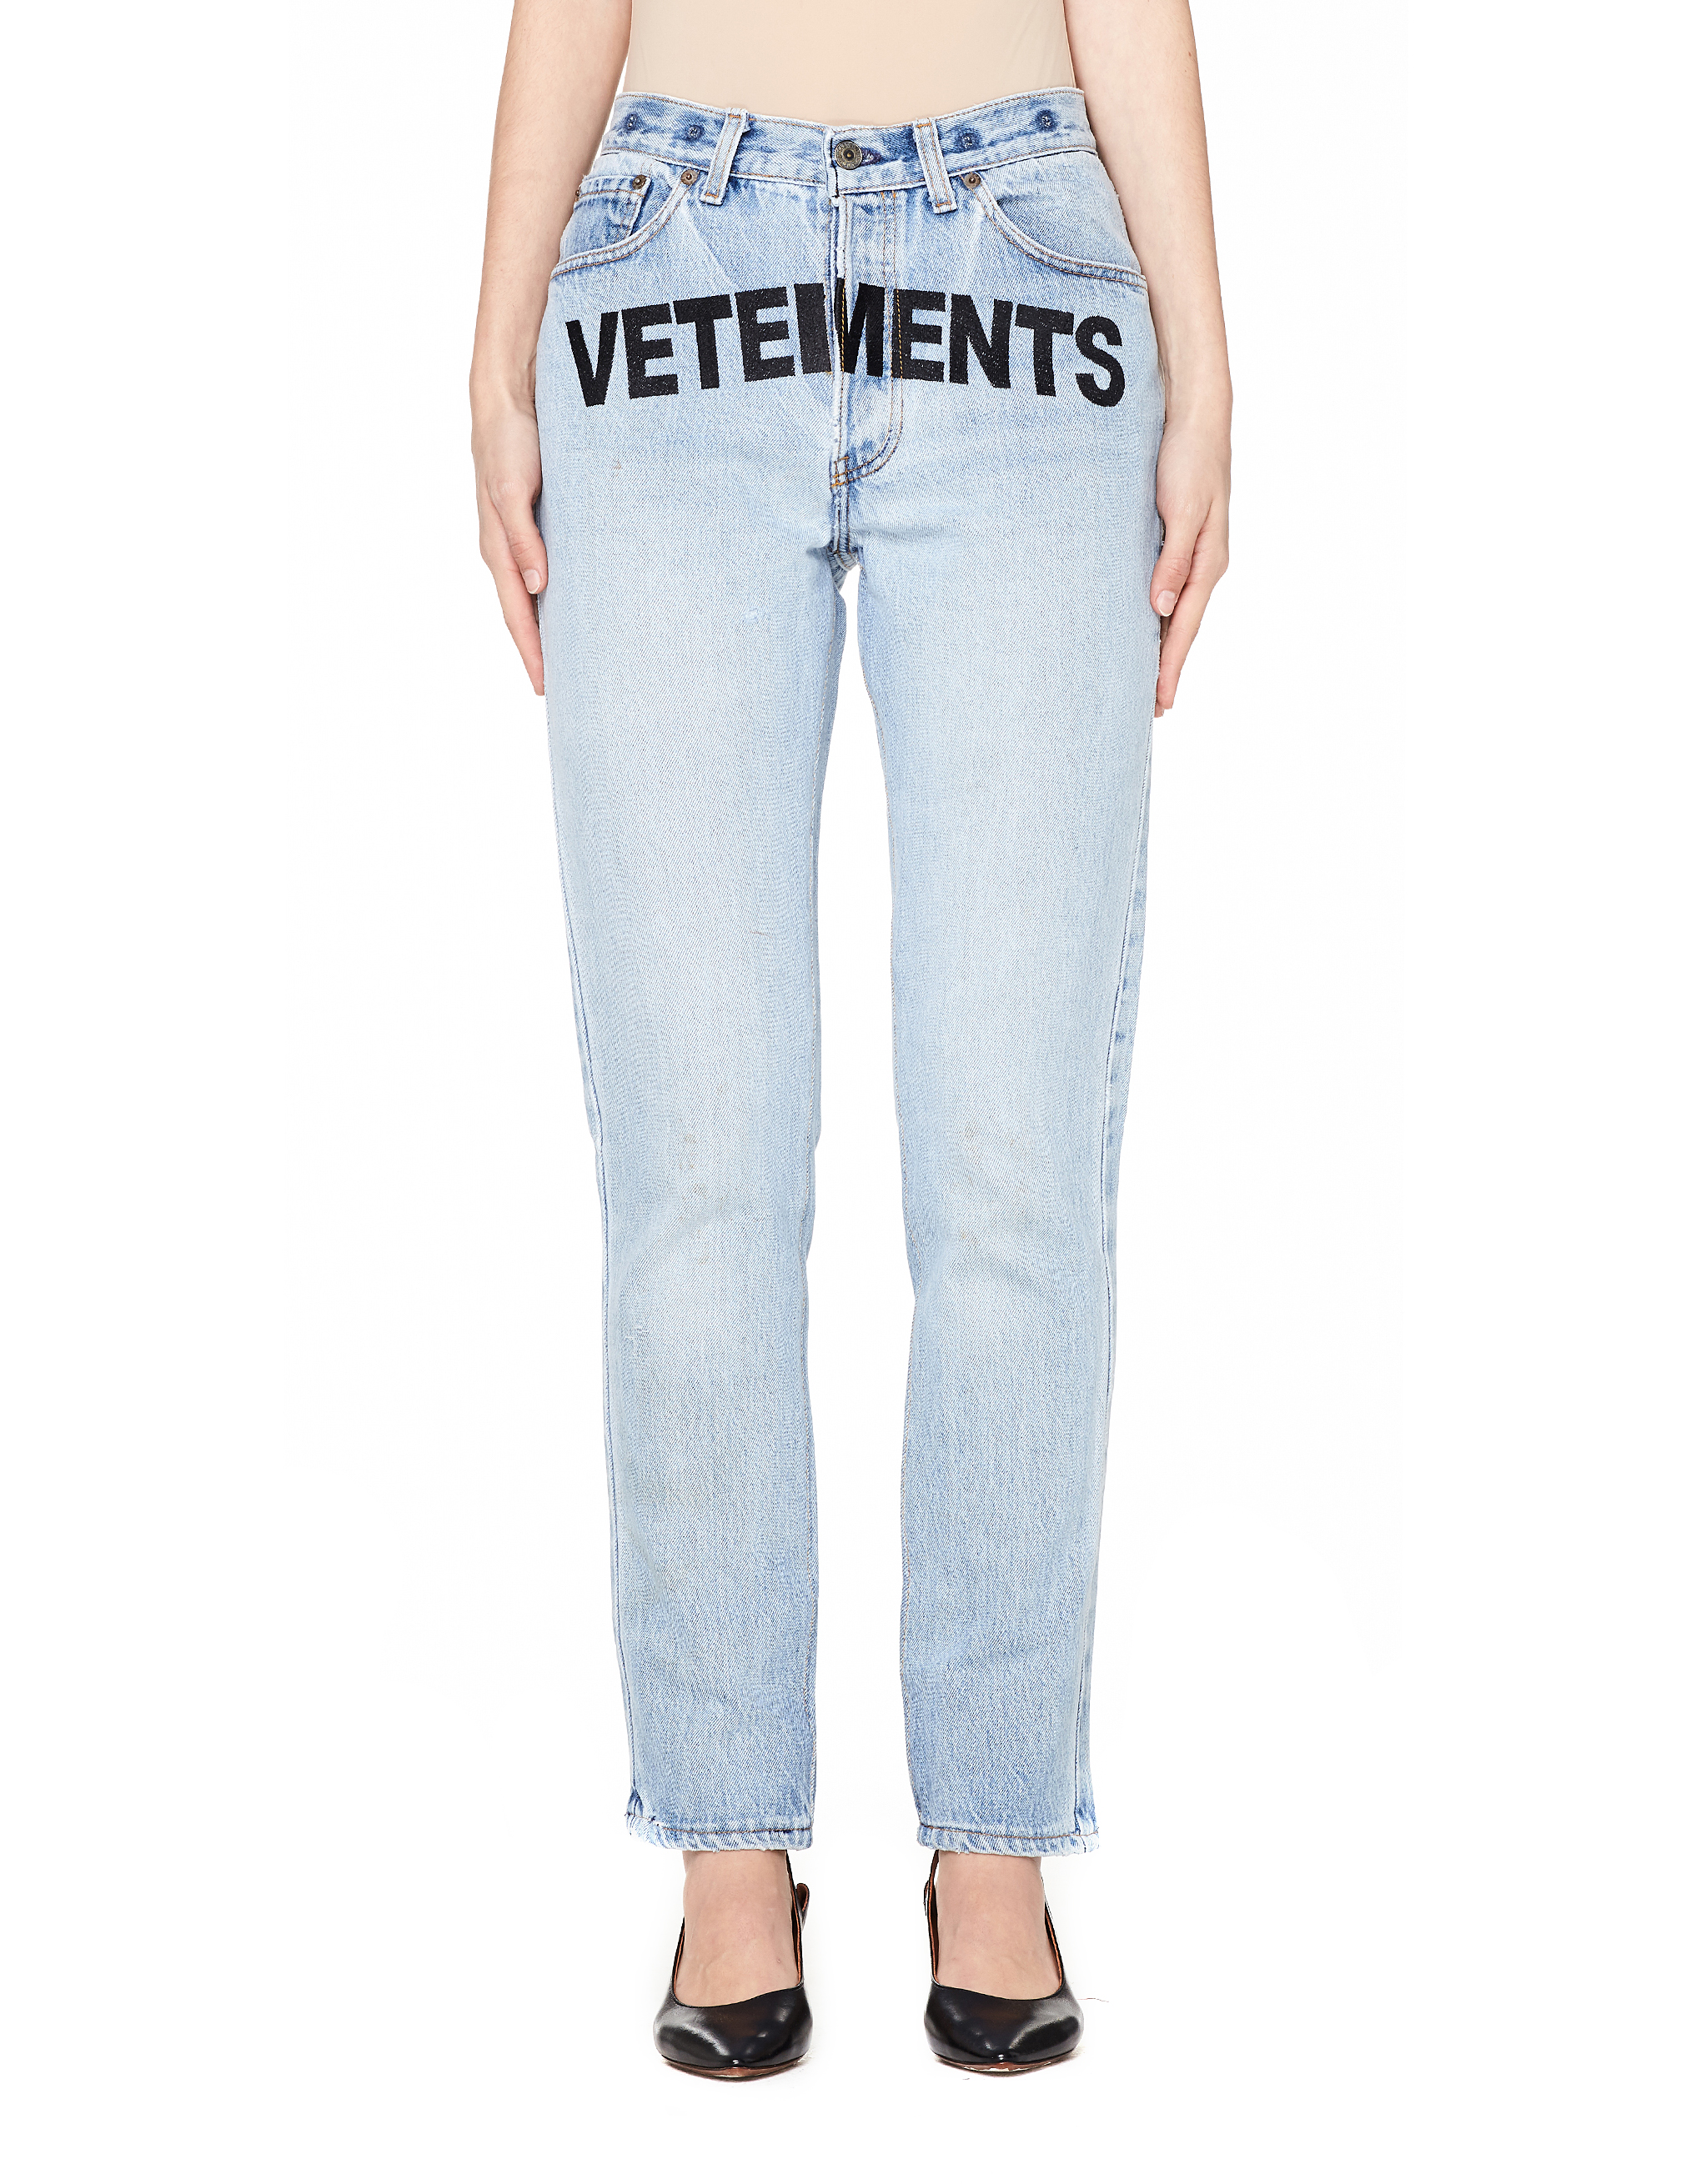 vetements jeans womens